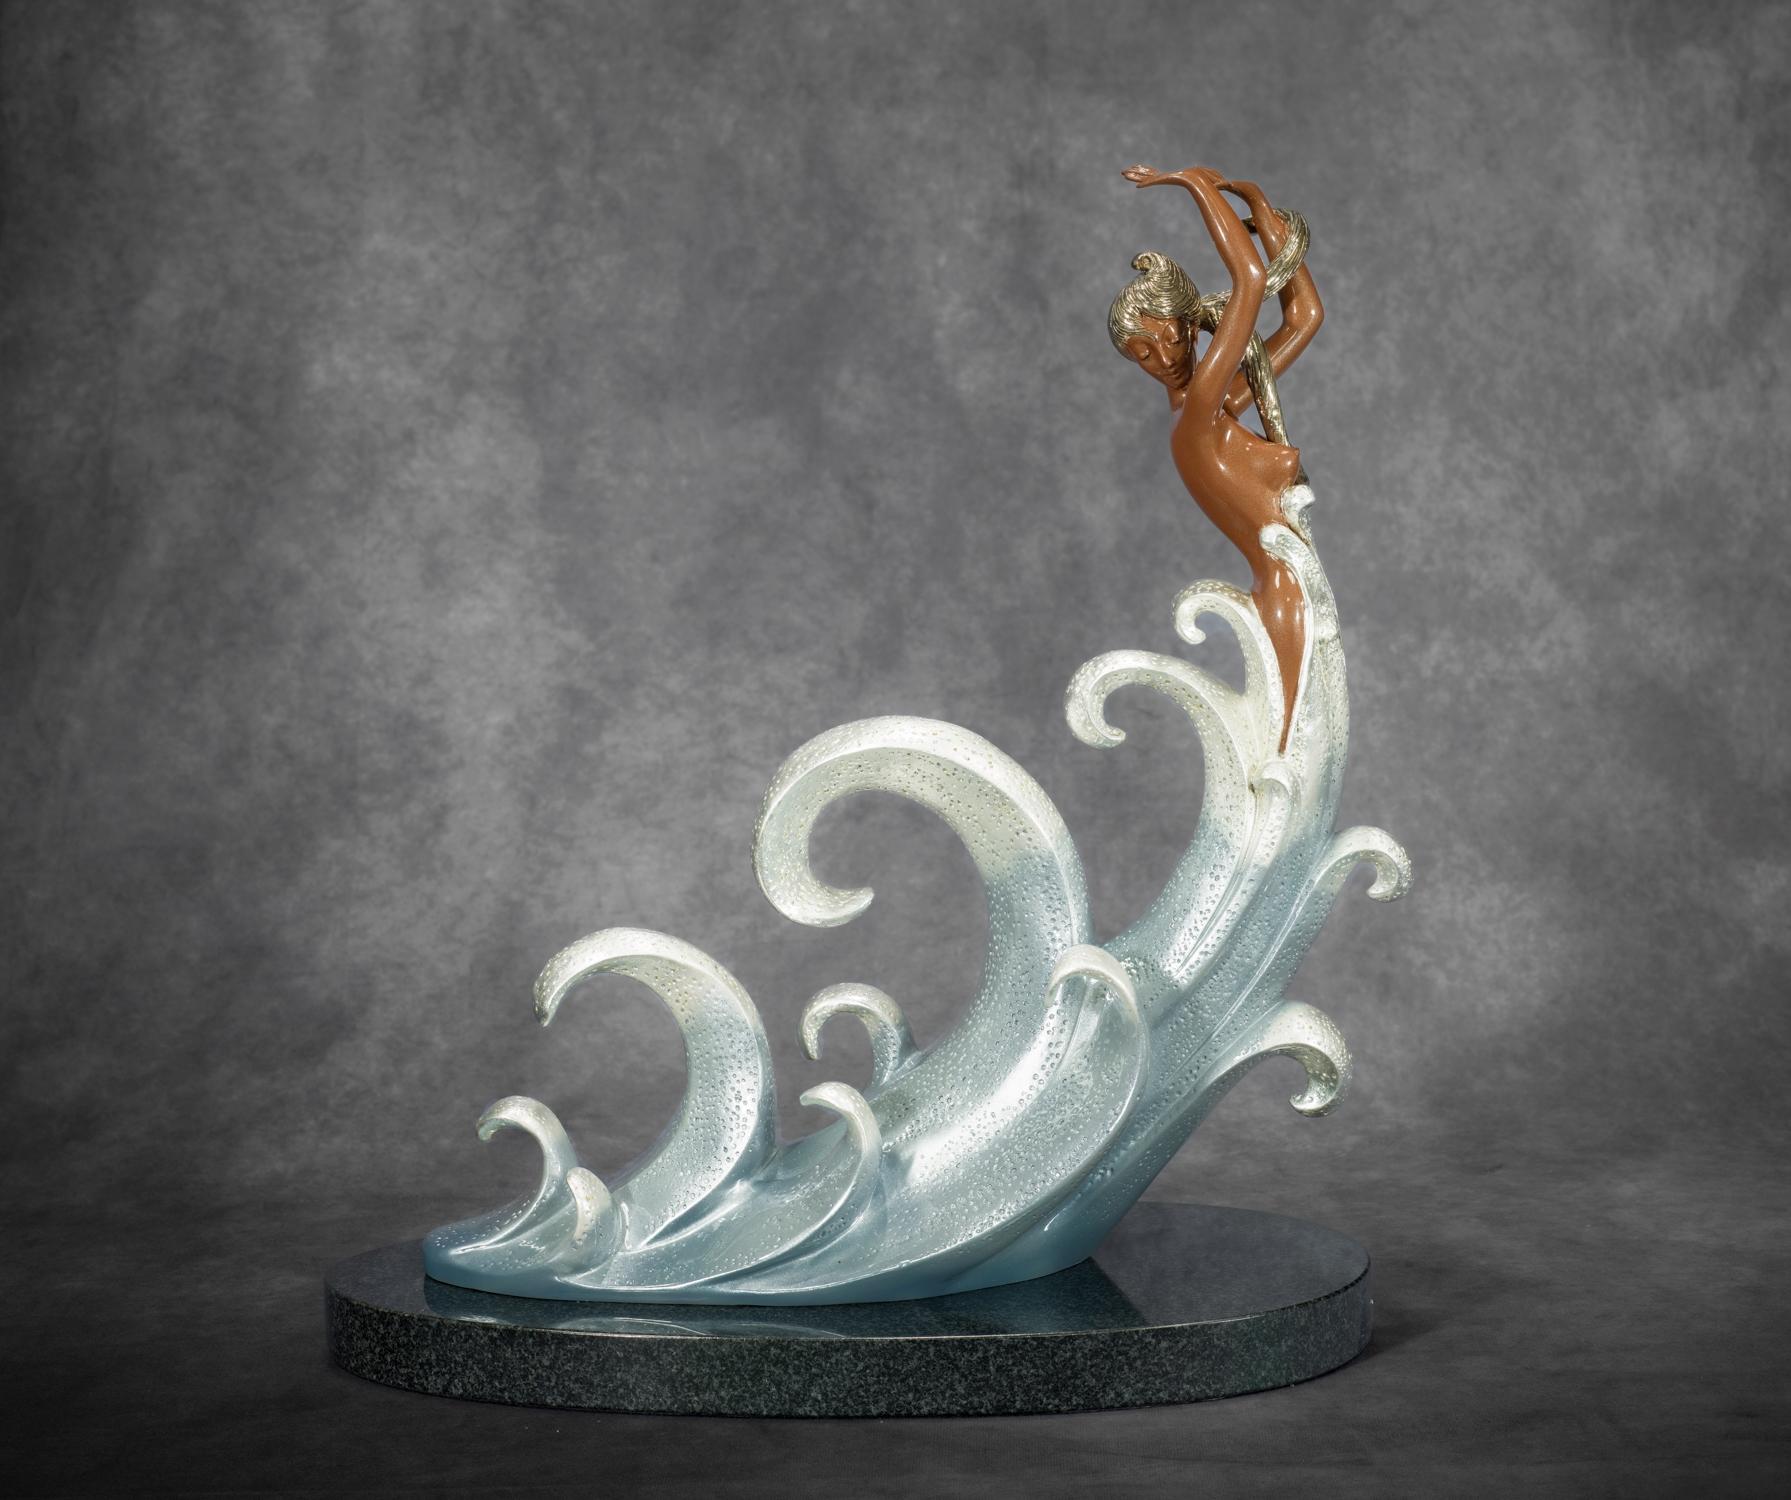 Erté Figurative Sculpture – The Wave